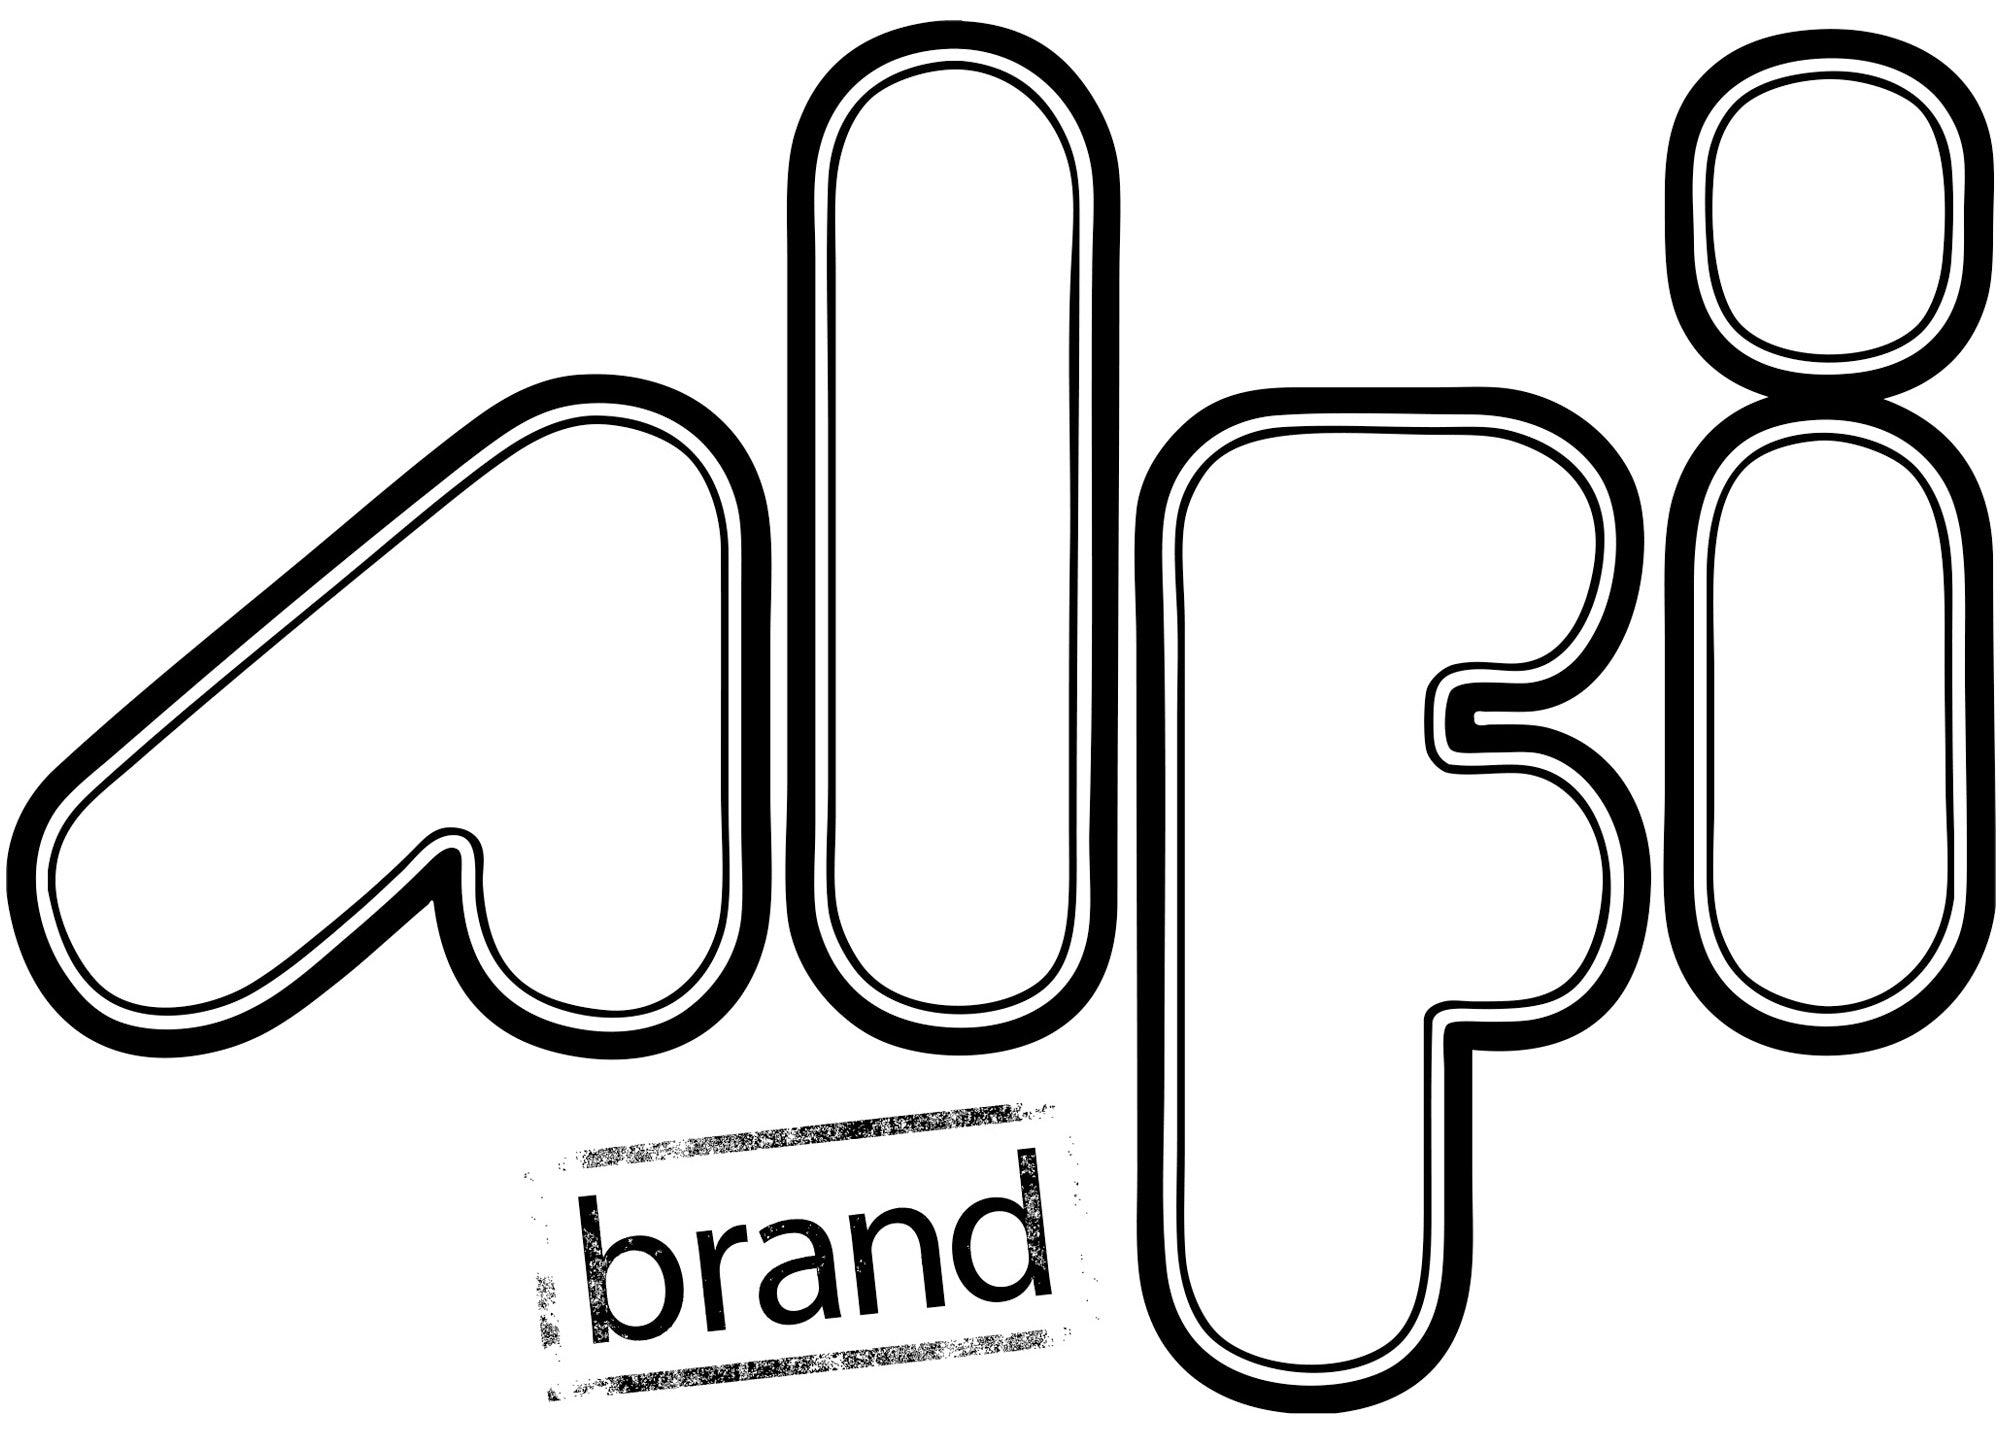 ALFI Brand - 67 inch White Rectangular Acrylic Free Standing Soaking Bathtub | AB8859